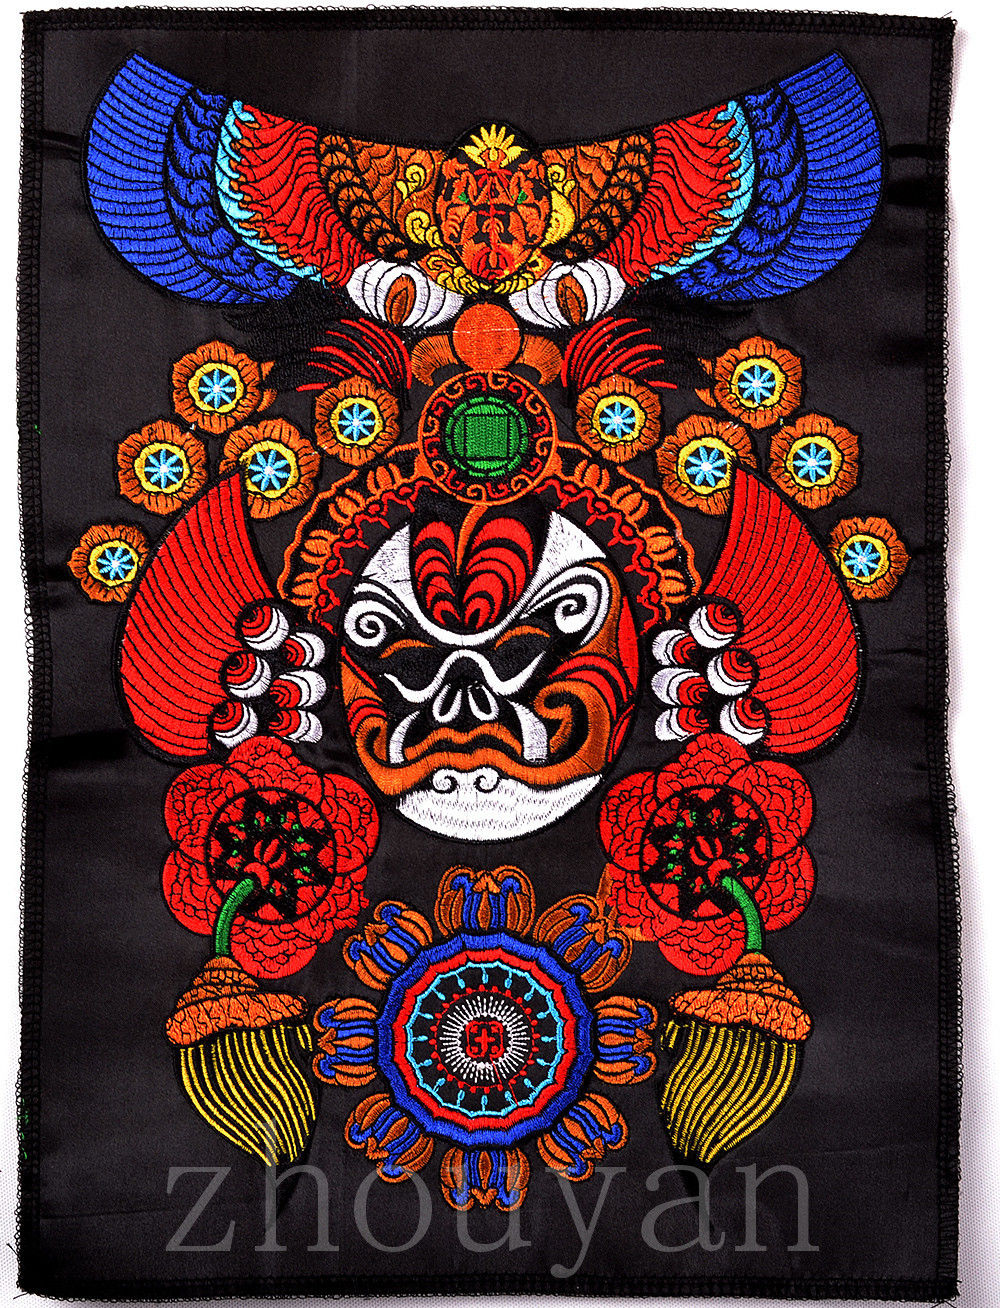 Tibean Vintage Embroidery Tapestry : EAGLE ,GENIE MASK, SLEEPING BATS MANDALA